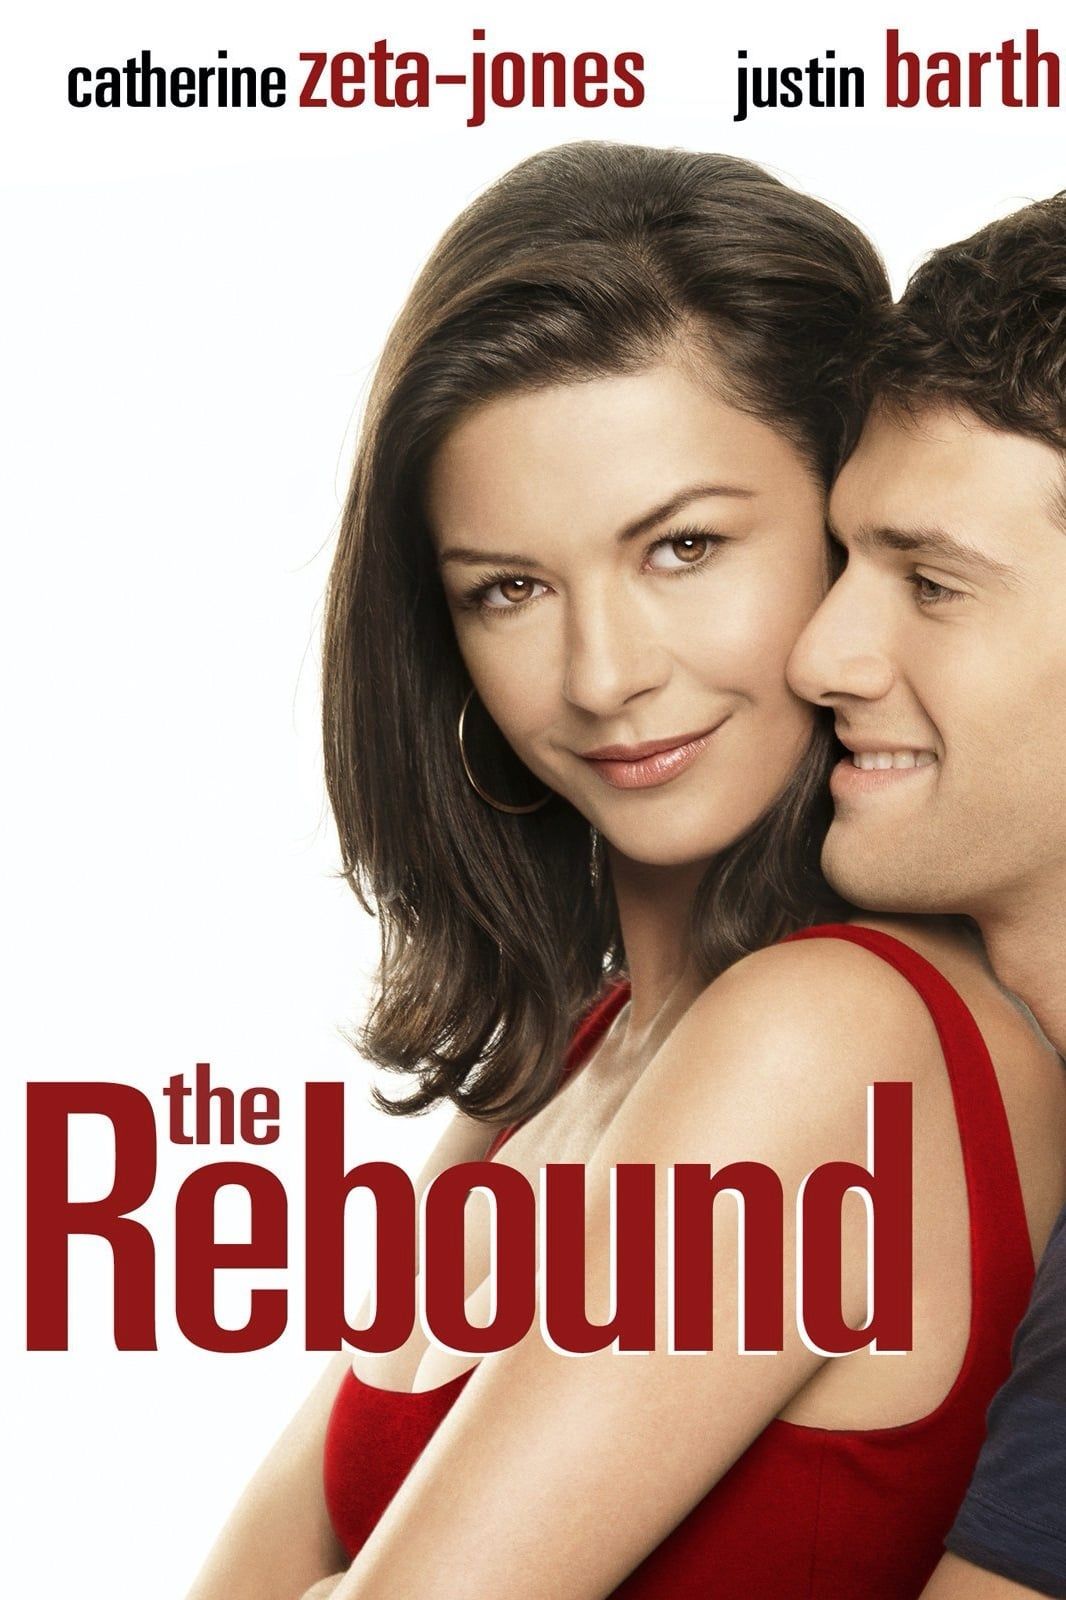 The Rebound (2009) Hindi Dubbed Full Movie